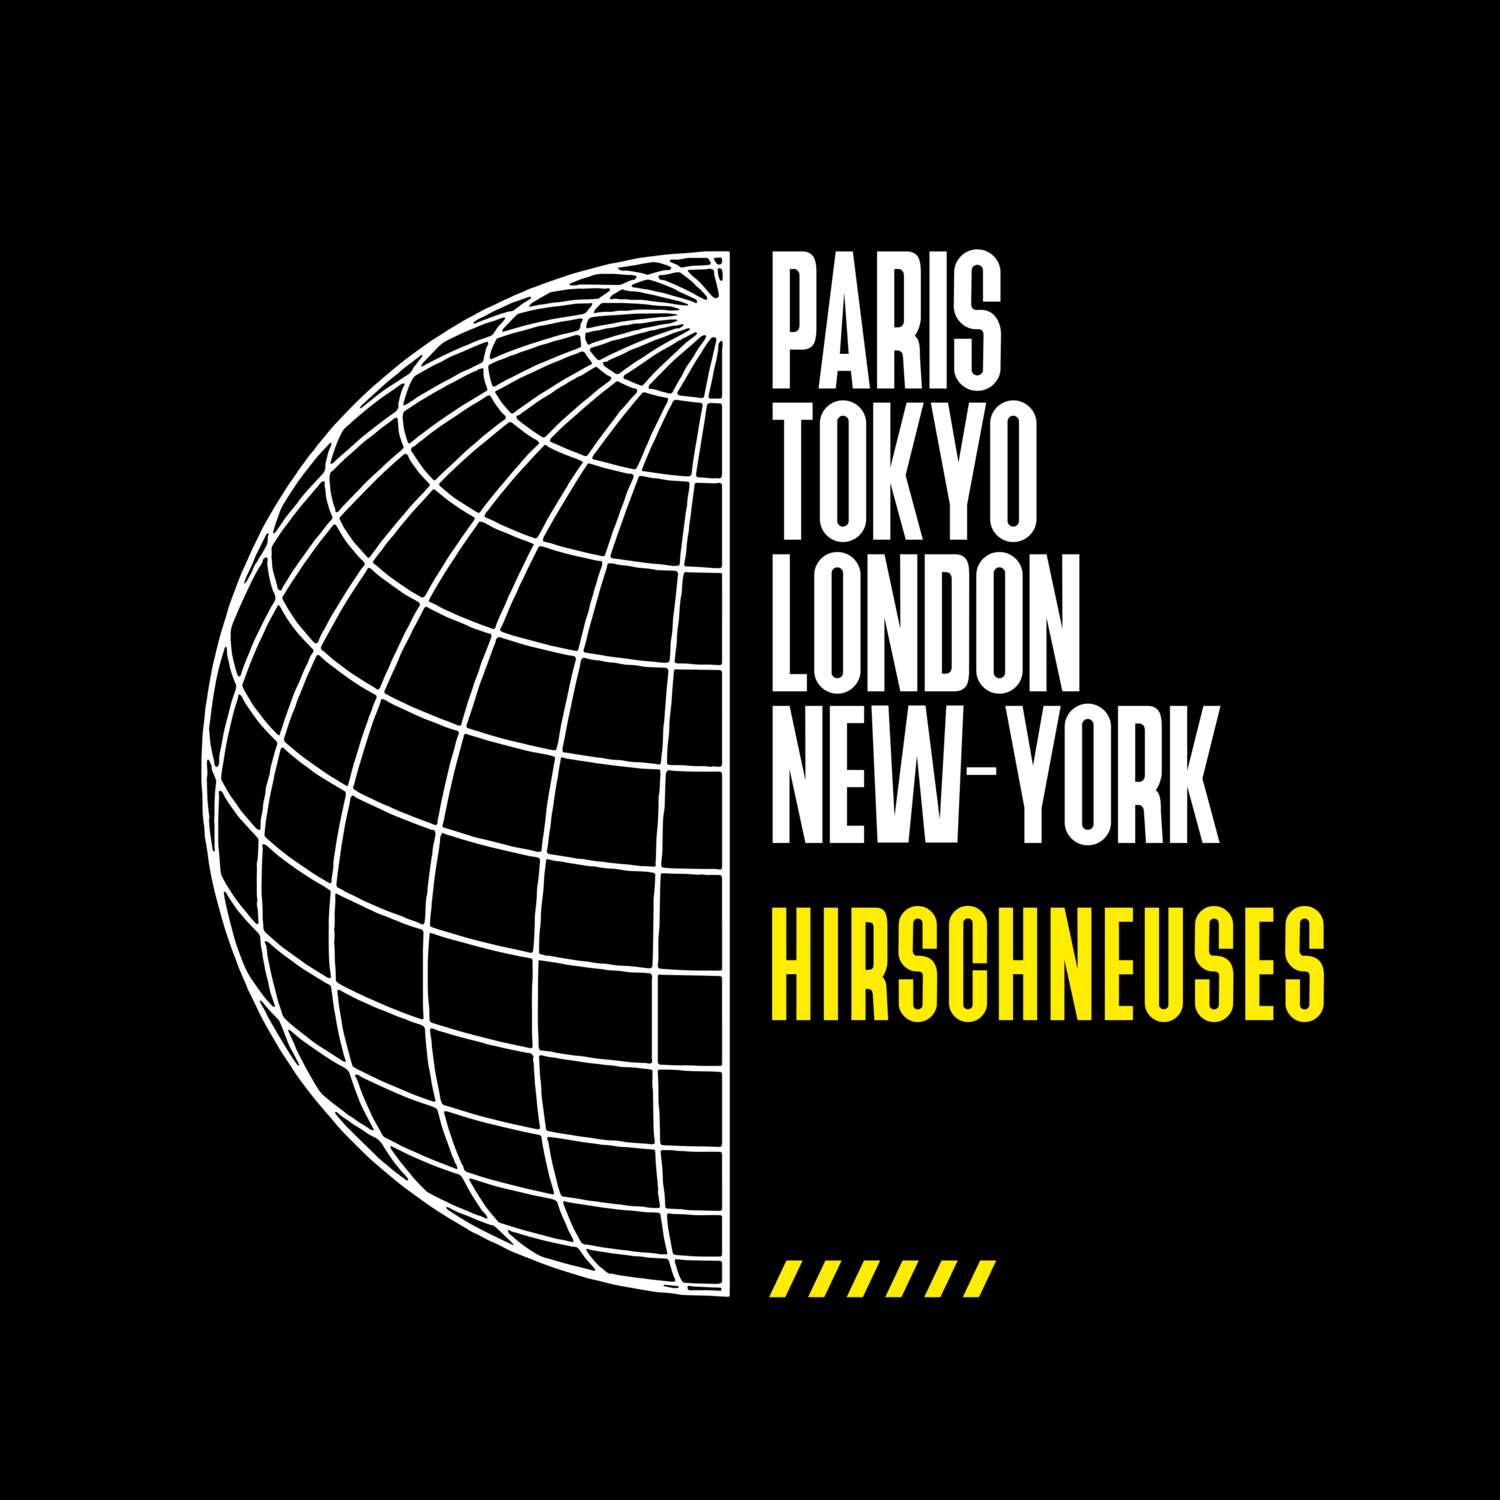 Hirschneuses T-Shirt »Paris Tokyo London«